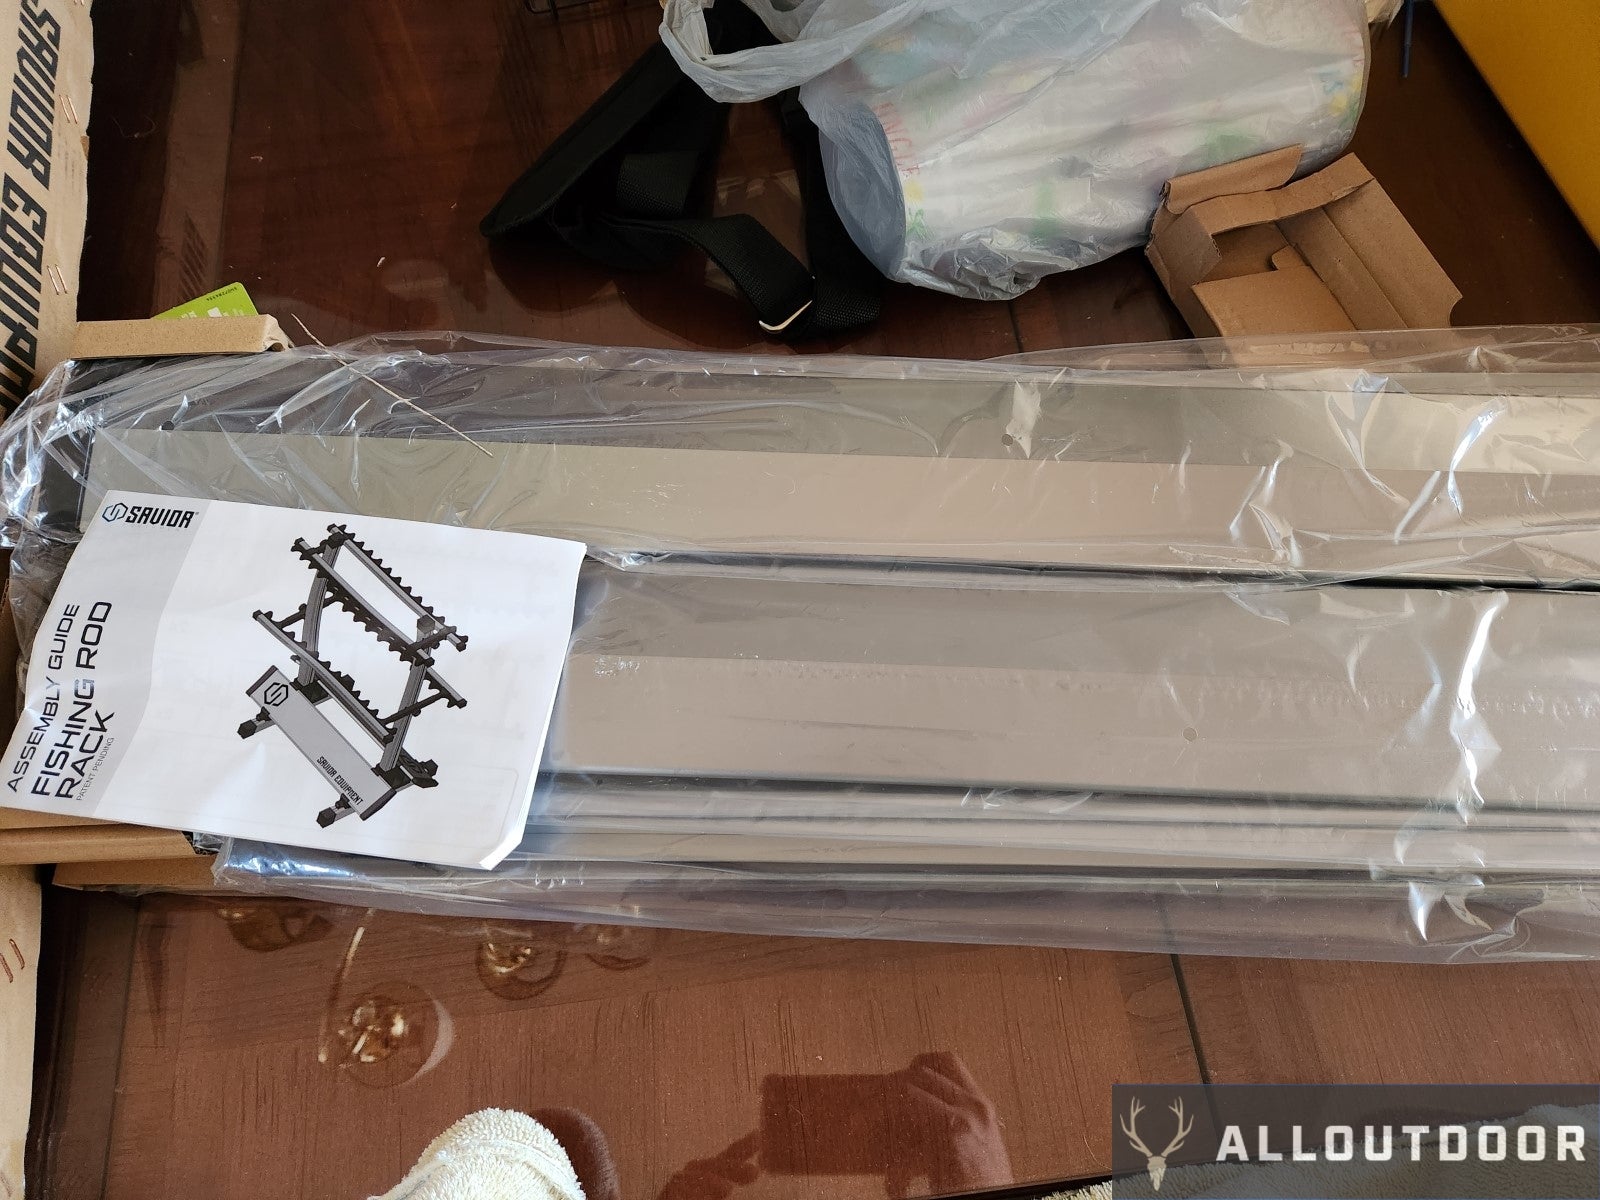 AllOutdoor Review - Savior Equipment Aluminum Fishing Rod Rack